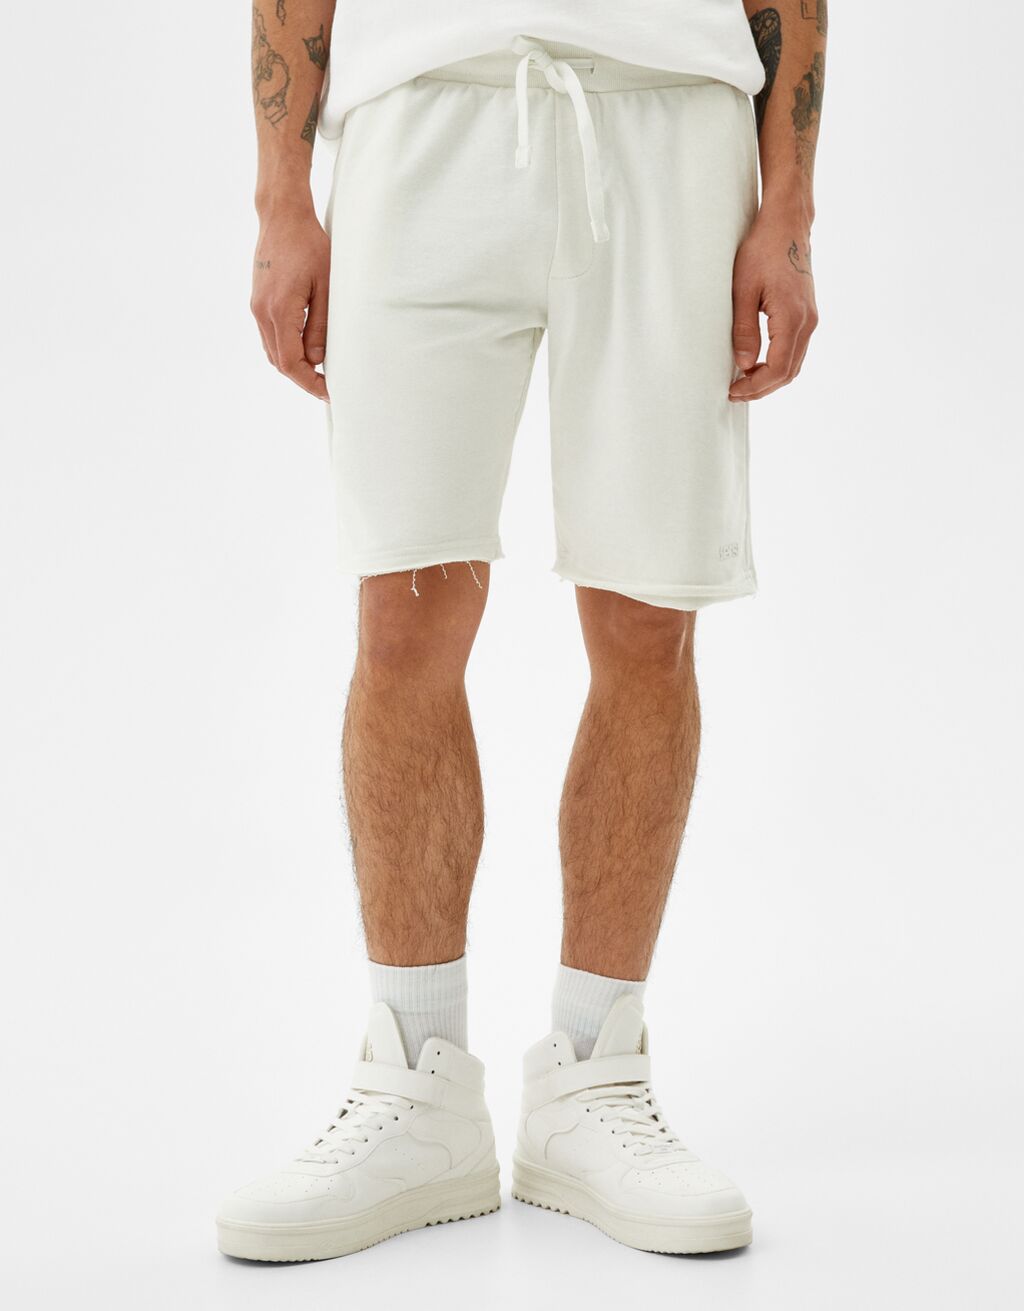 Basic sweatshirt material Bermuda shorts